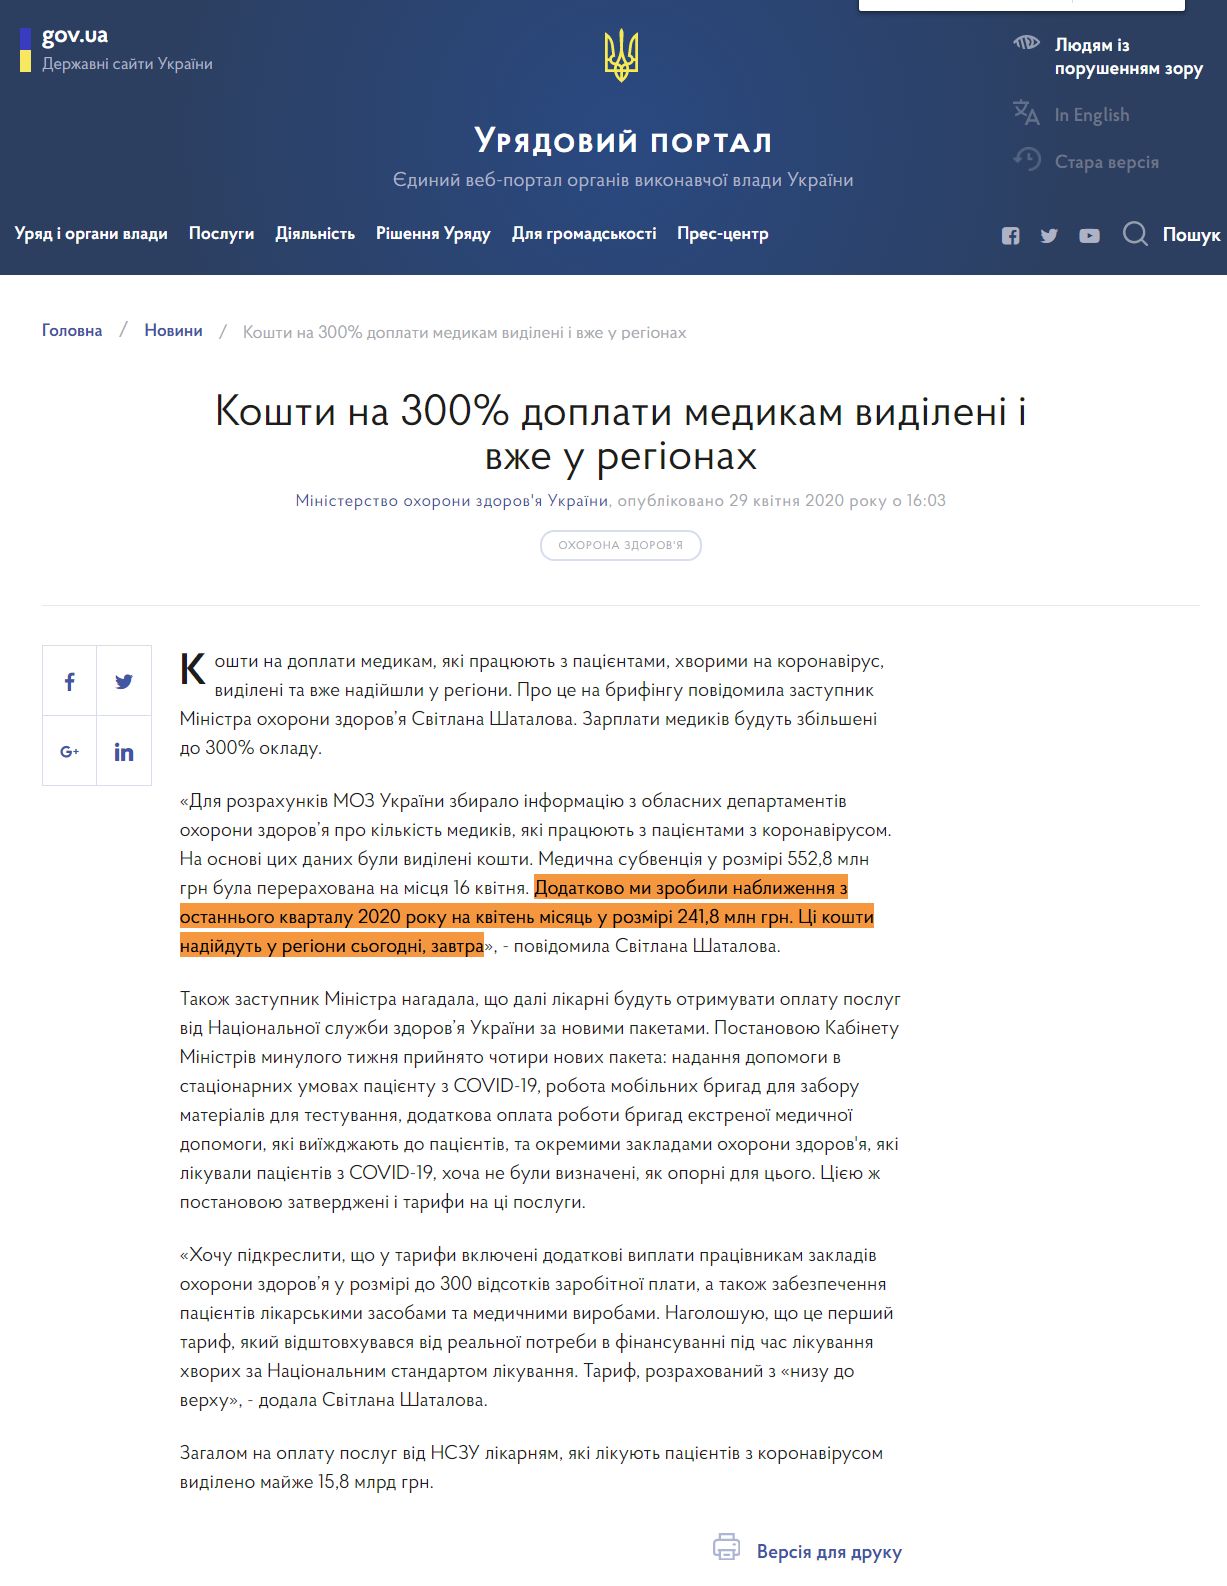 https://www.kmu.gov.ua/news/koshti-na-300-doplati-medikam-vidileni-i-vzhe-u-regionah